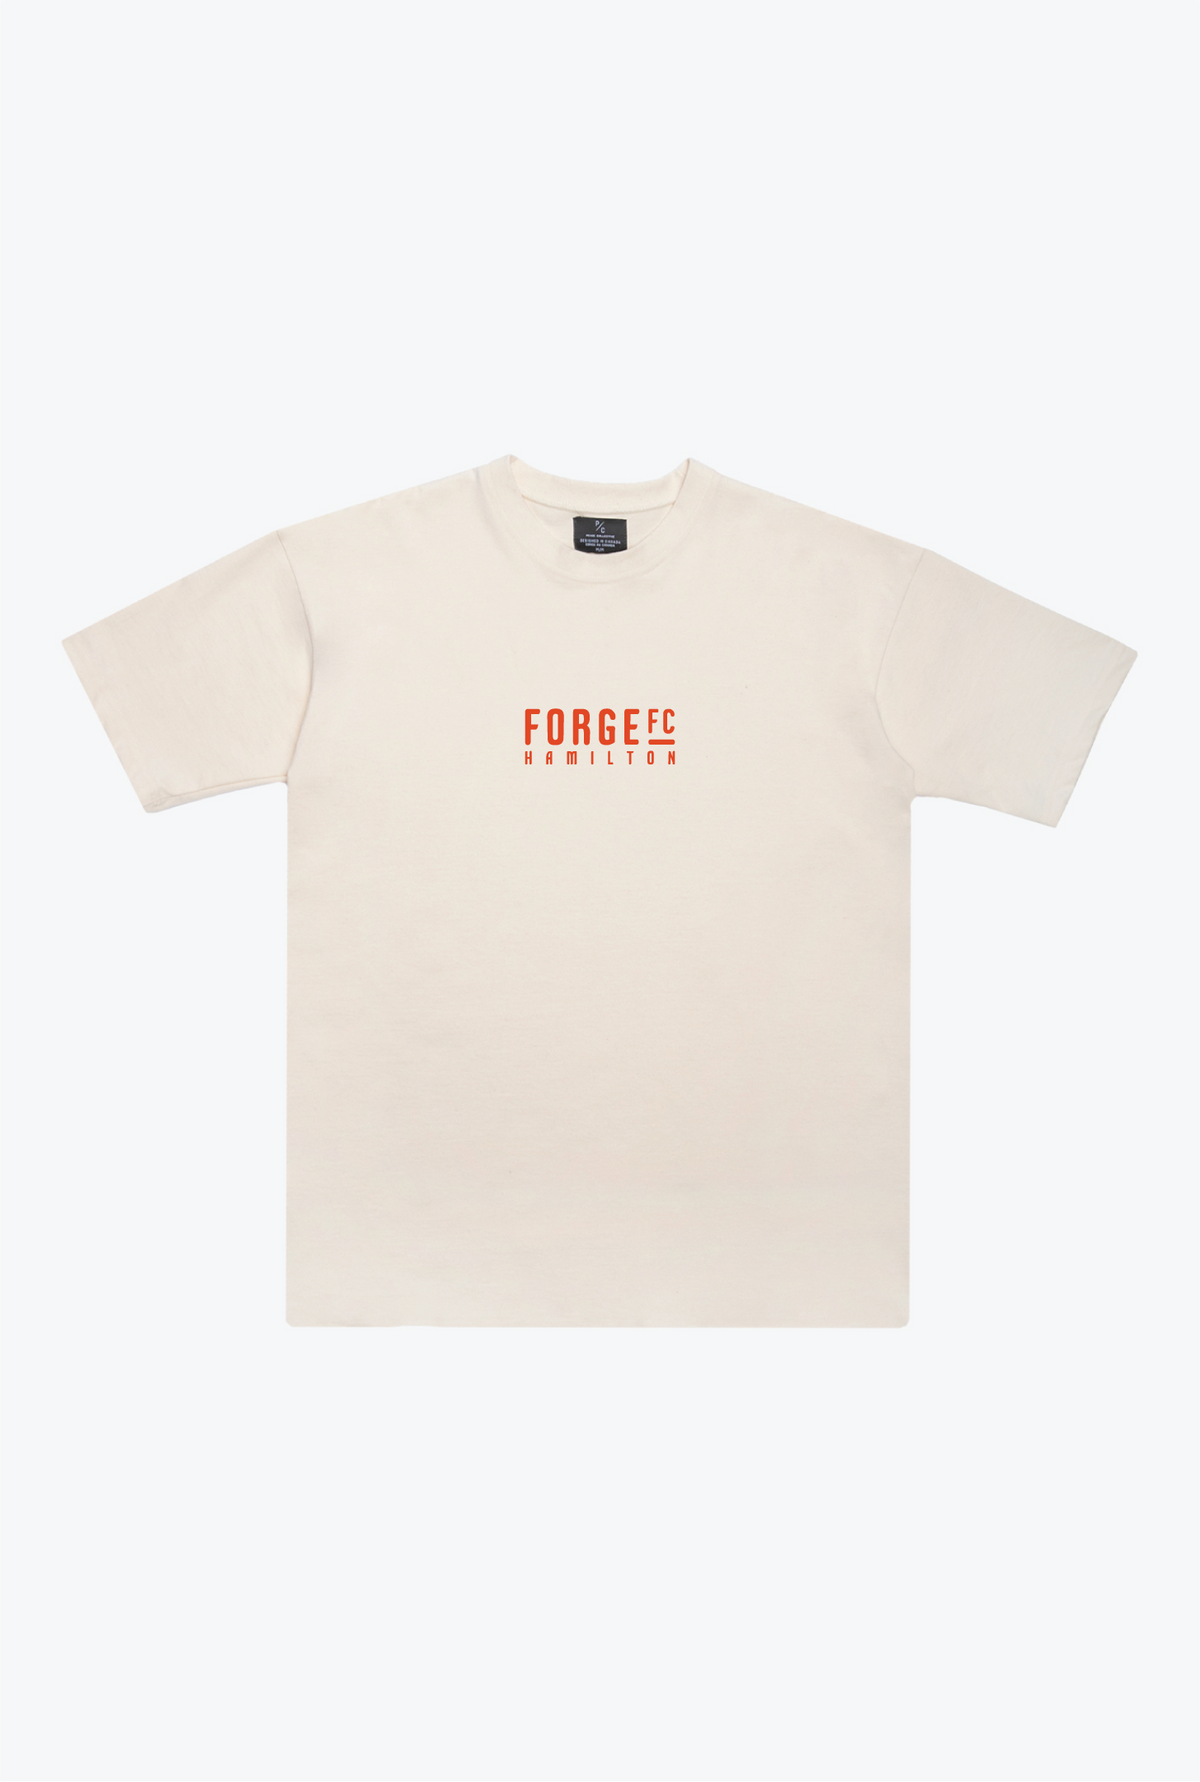 Forge FC Heavyweight T-Shirt - Ivory